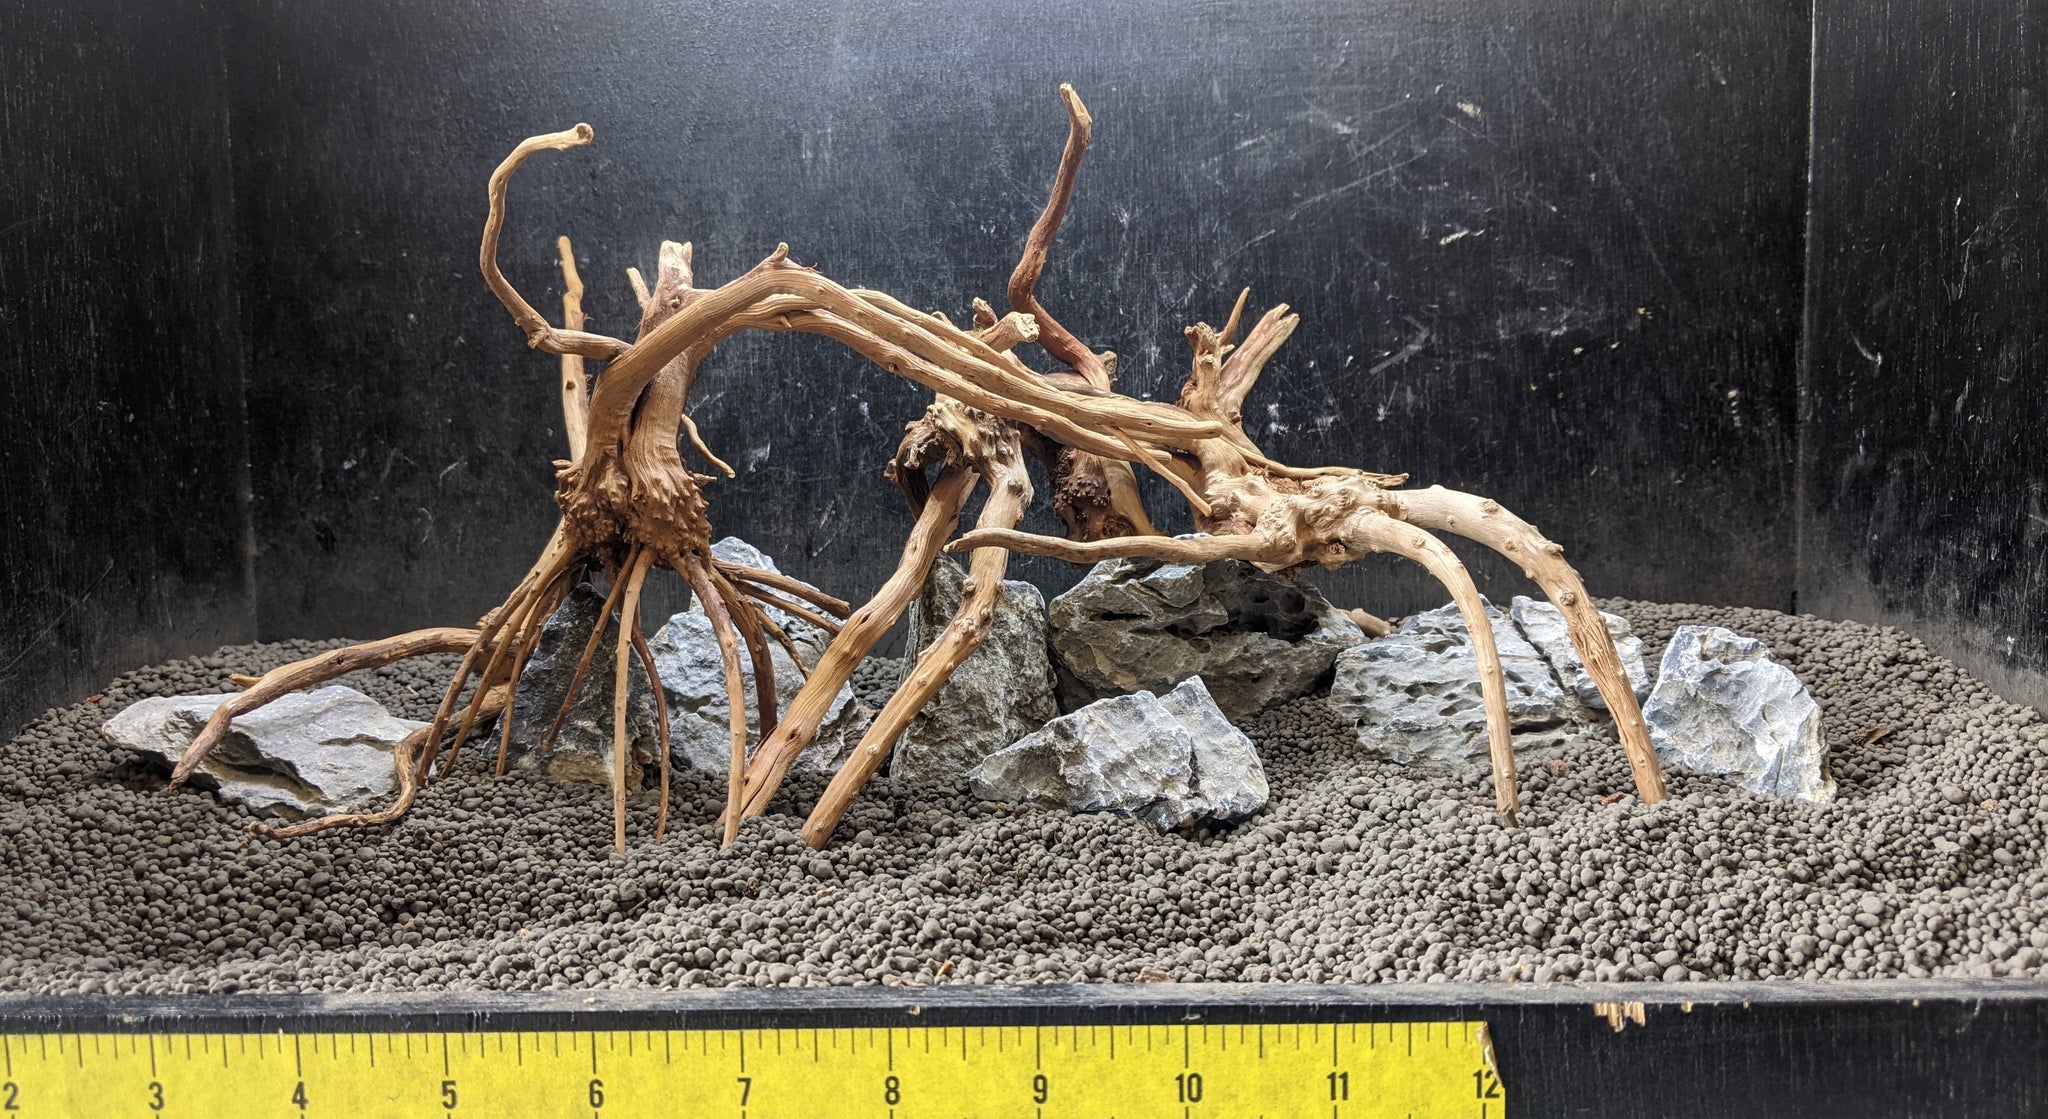 Spider Wood, Aquarium Rocks & Wood